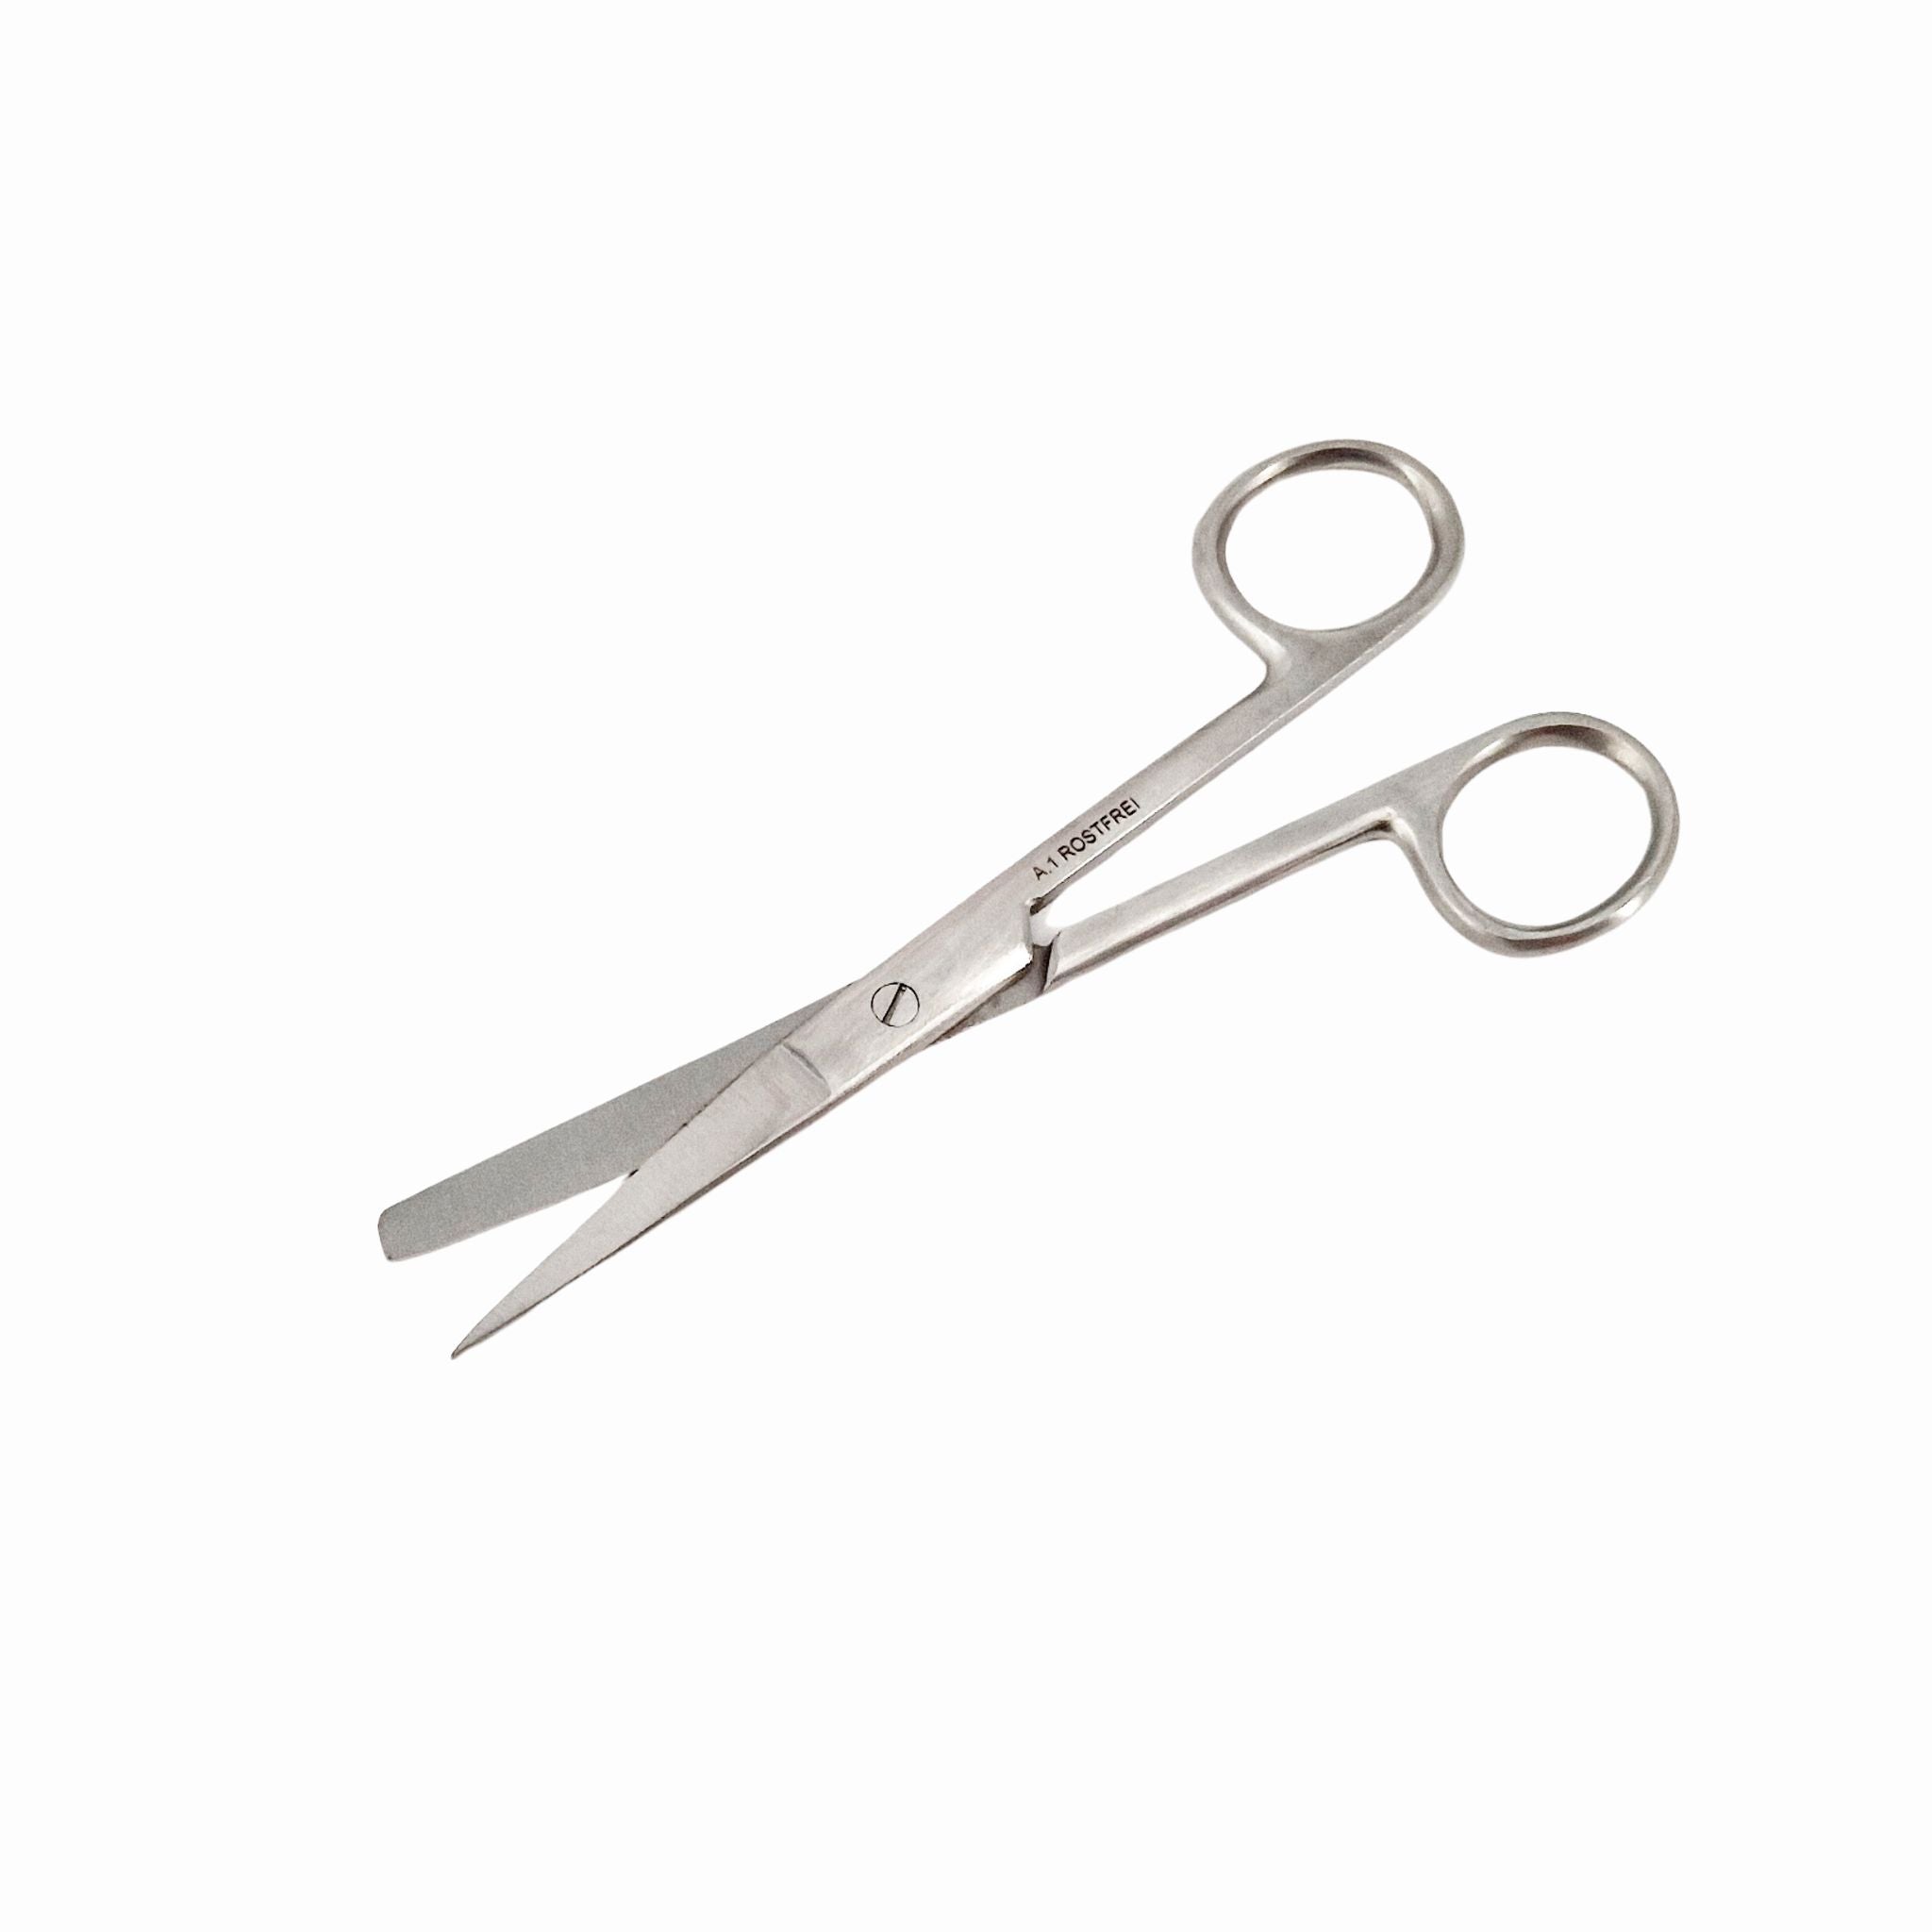 Lavabis scissors straight stainless steel